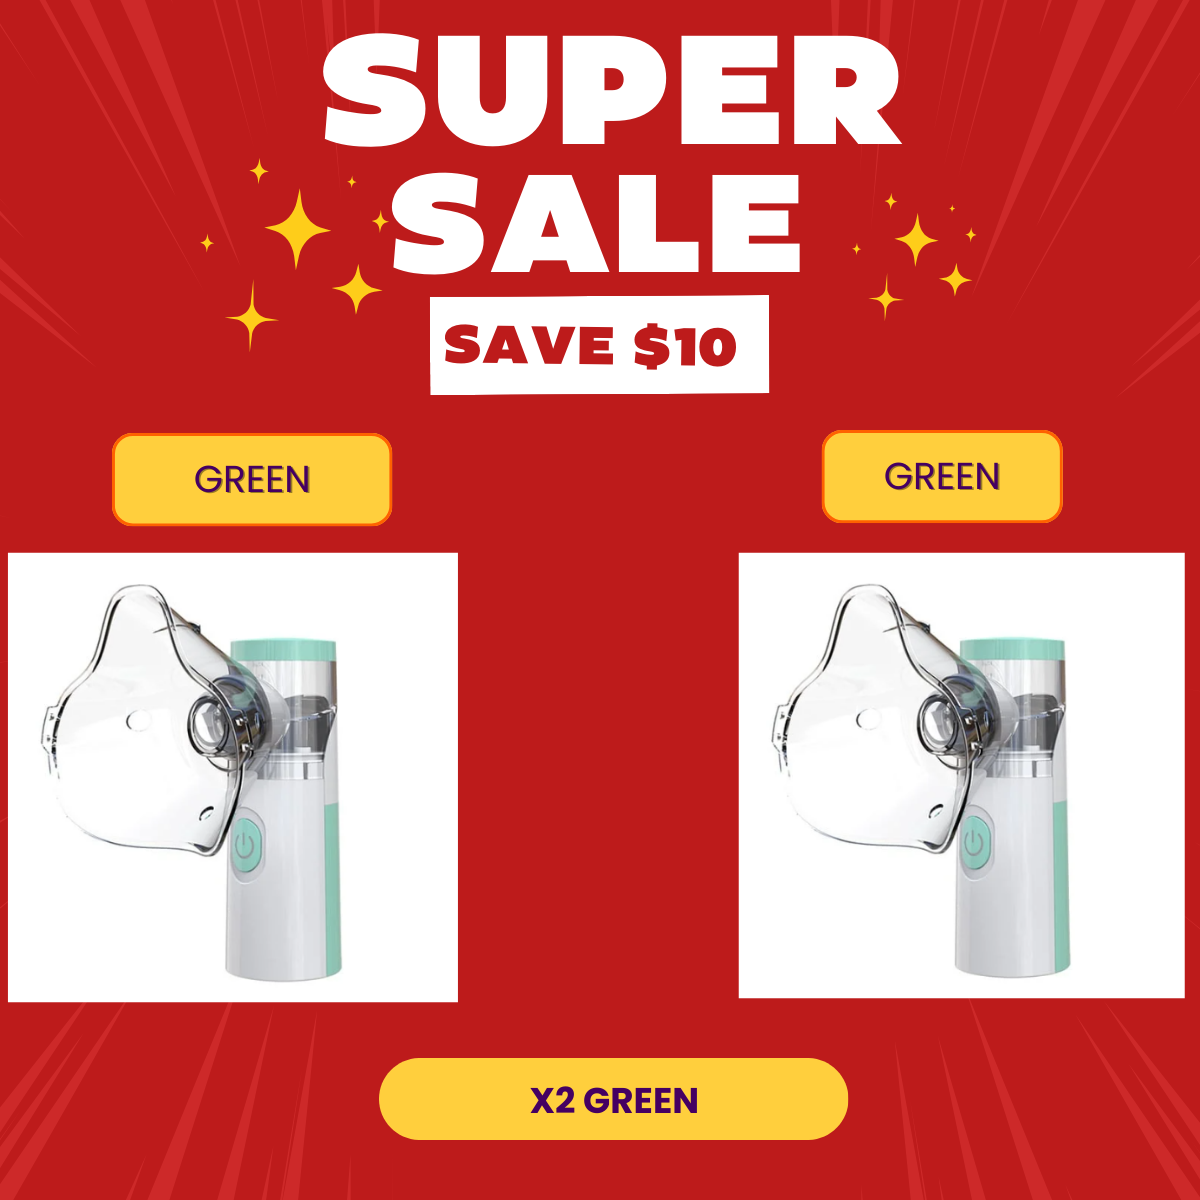 🔥HOT SALE 49% OFF 💖 Nebulizer Portable Machine For Adult & Kids